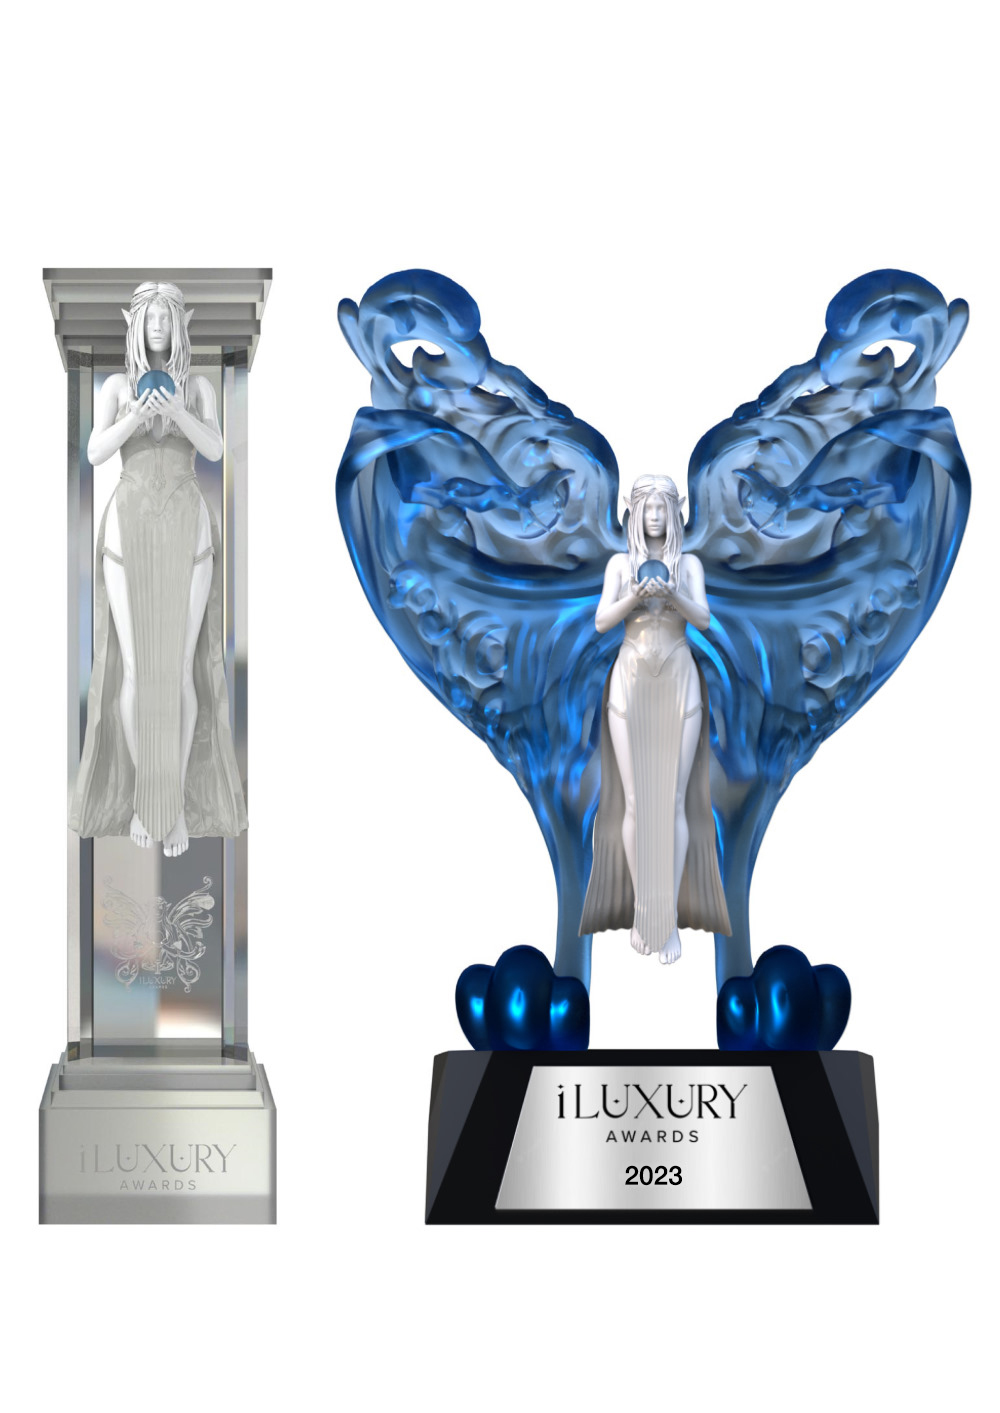 iLuxury Awards Statuette